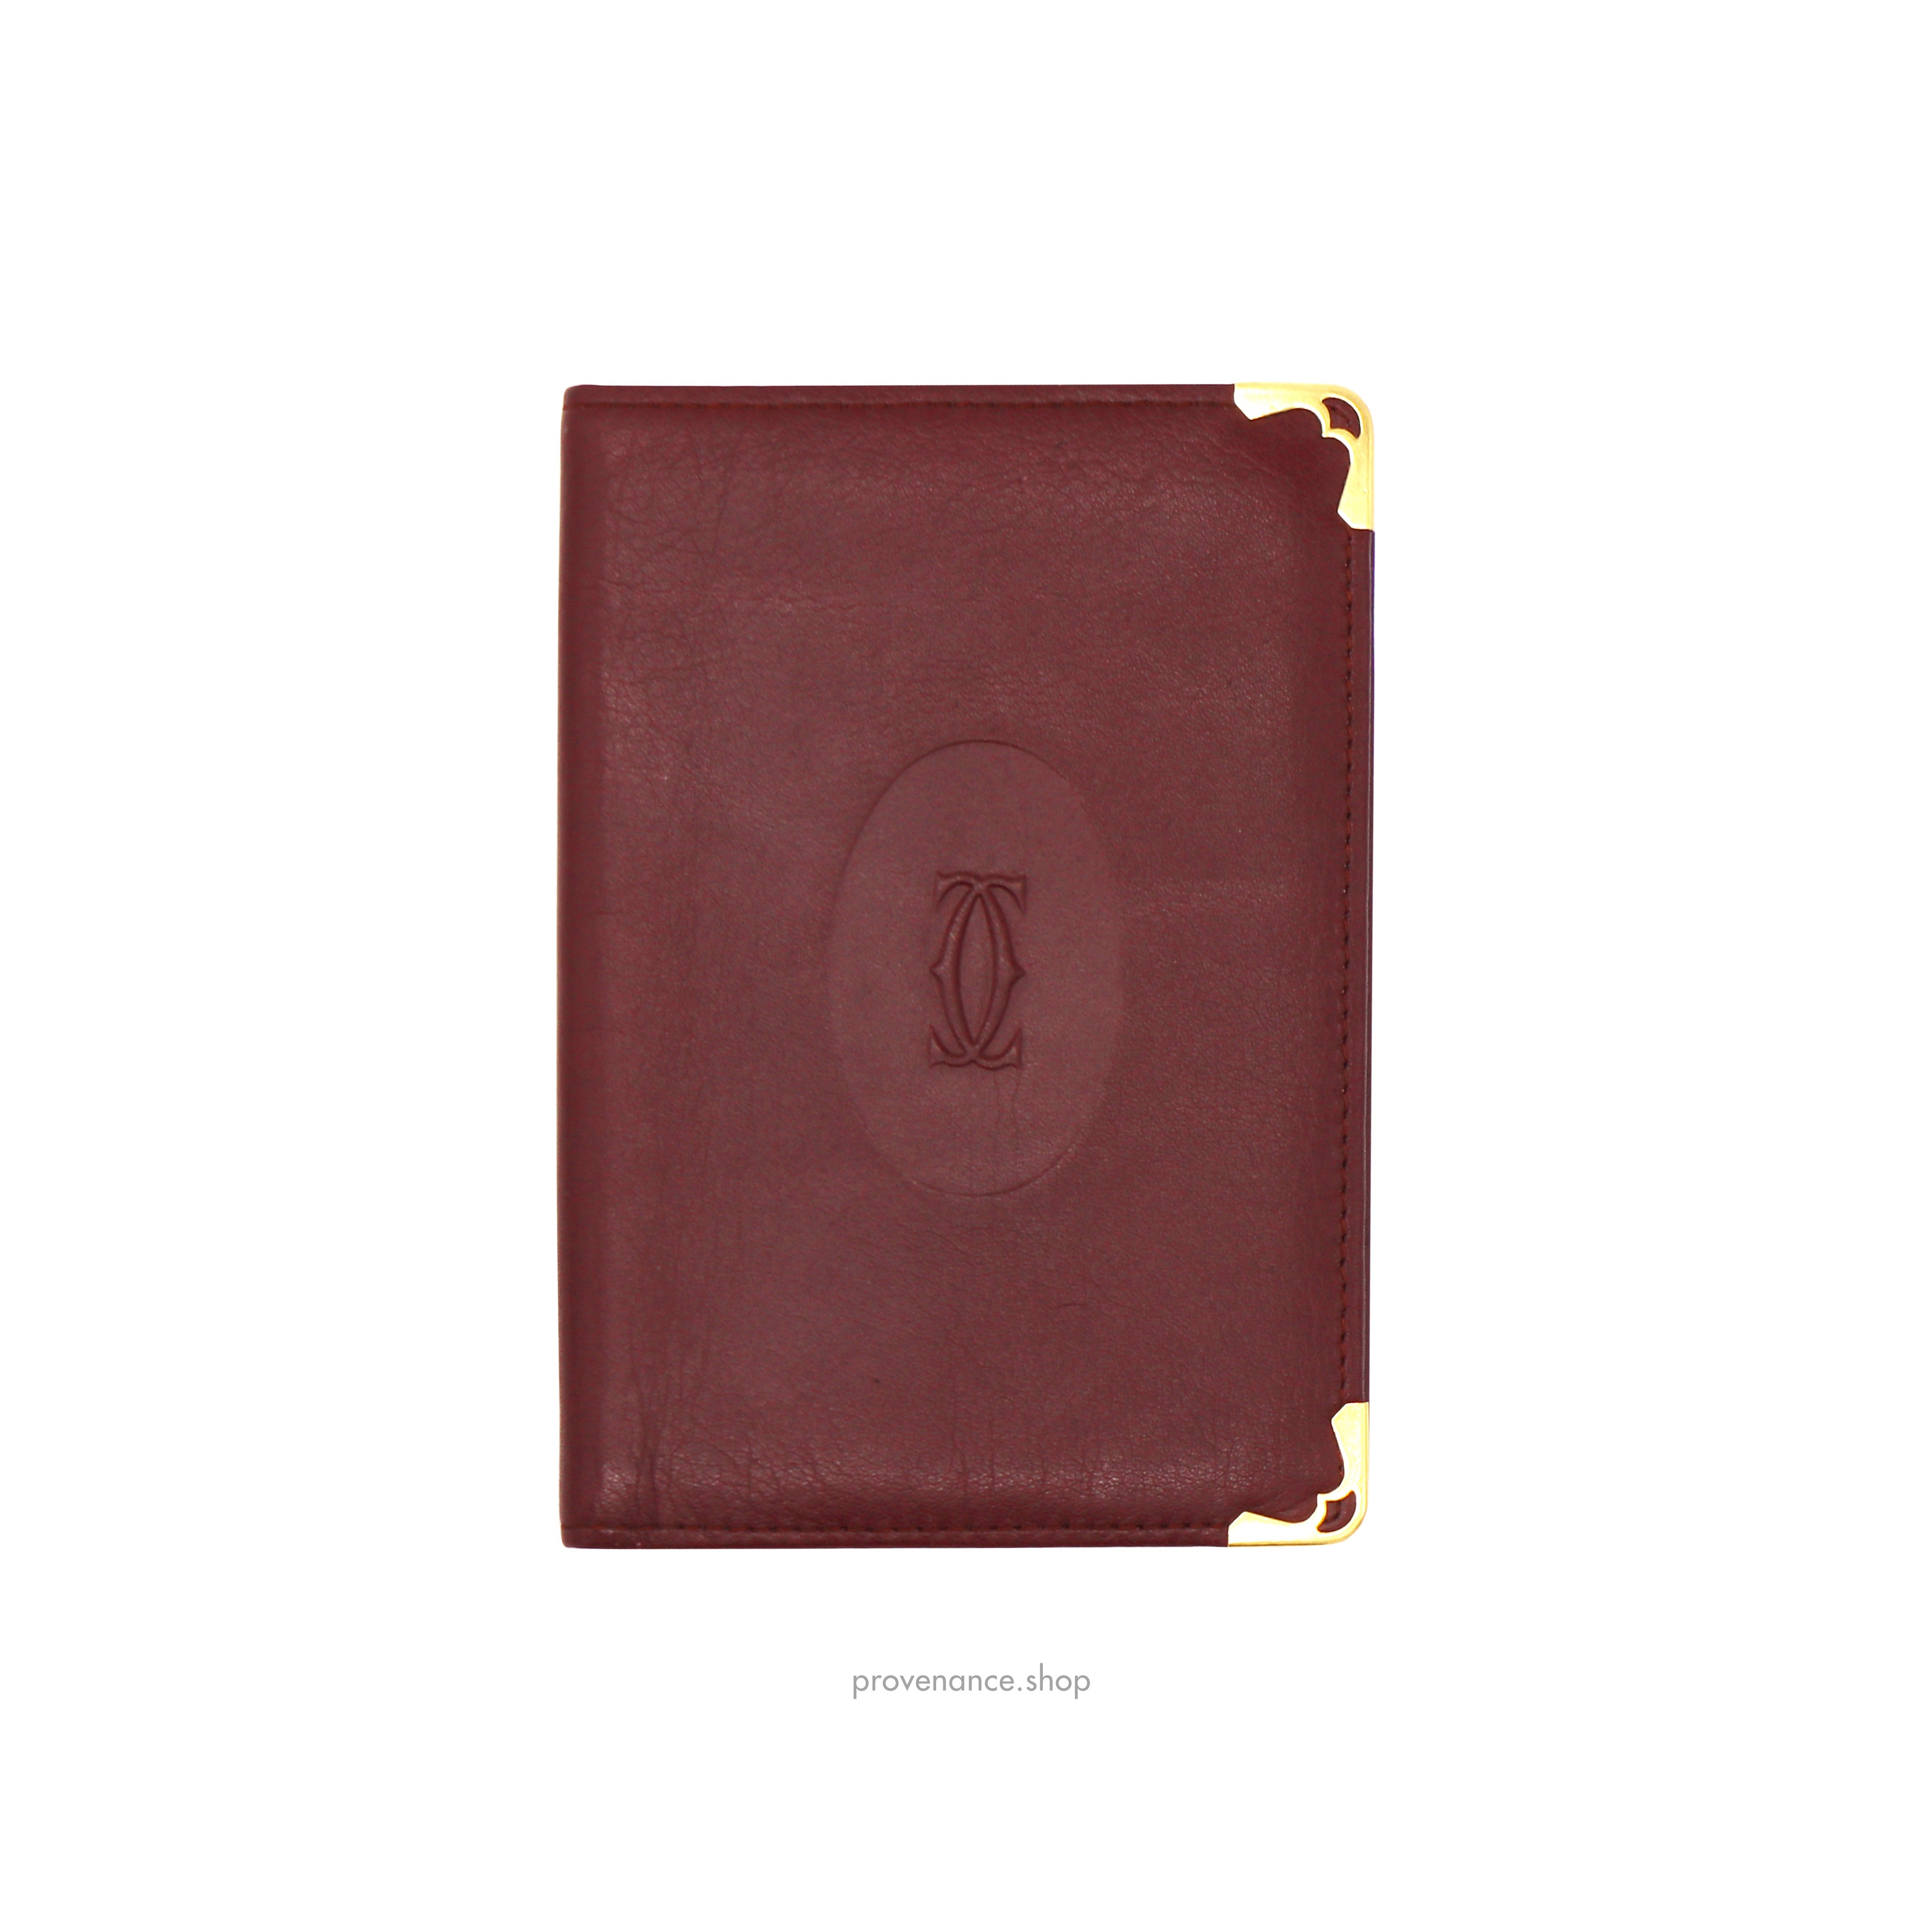 Cartier Passport Holder Wallet - Burgundy Leather - 1